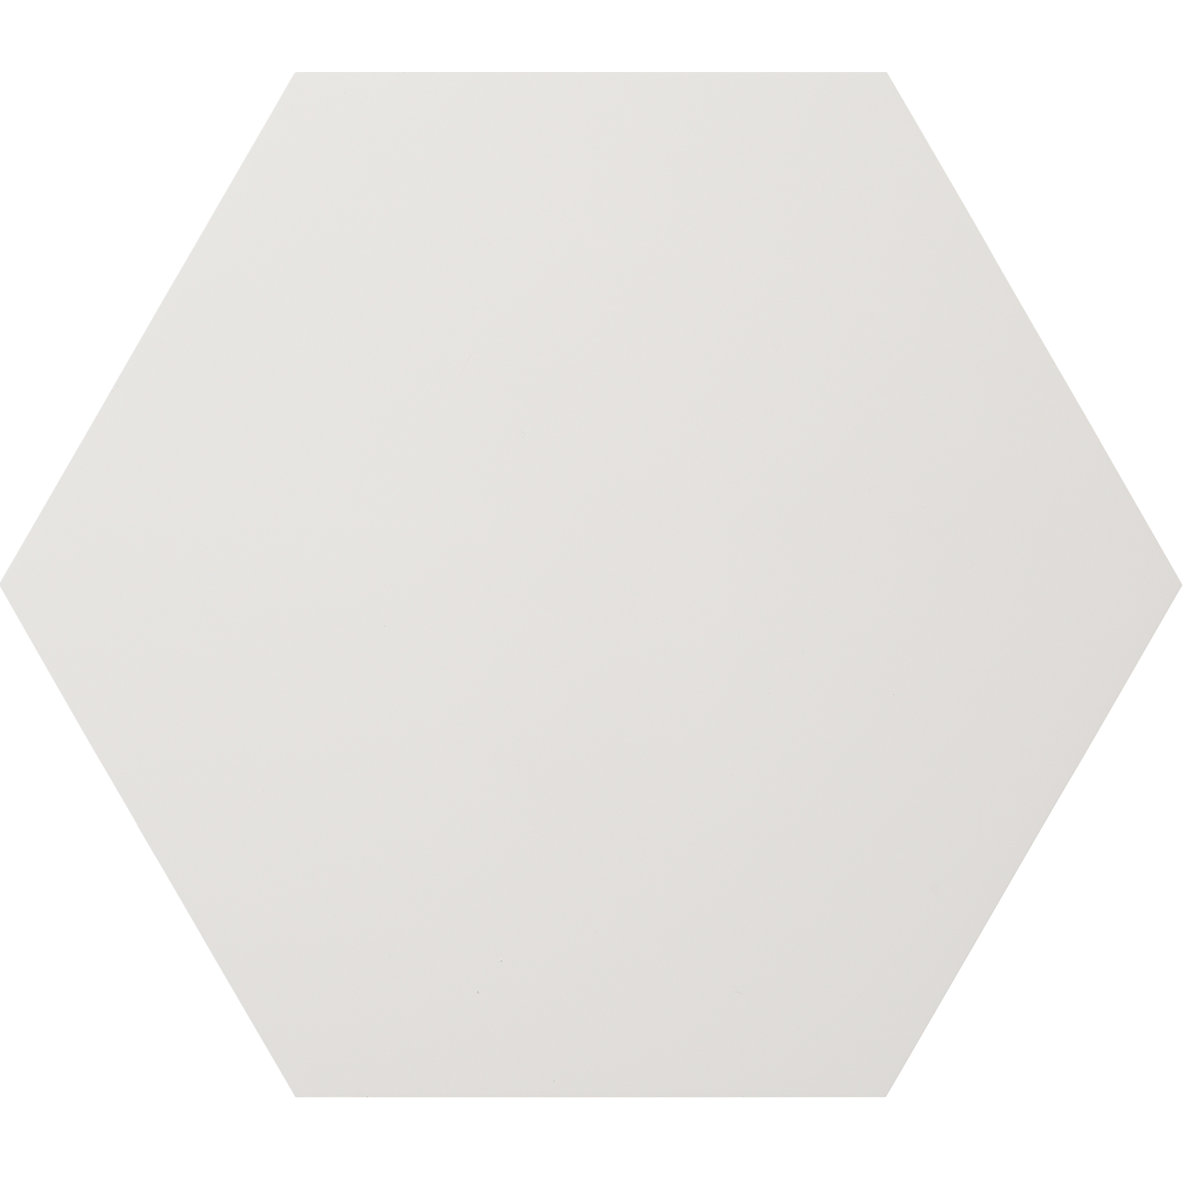 Tableau blanc design – Chameleon (Illustration du produit 20)-19